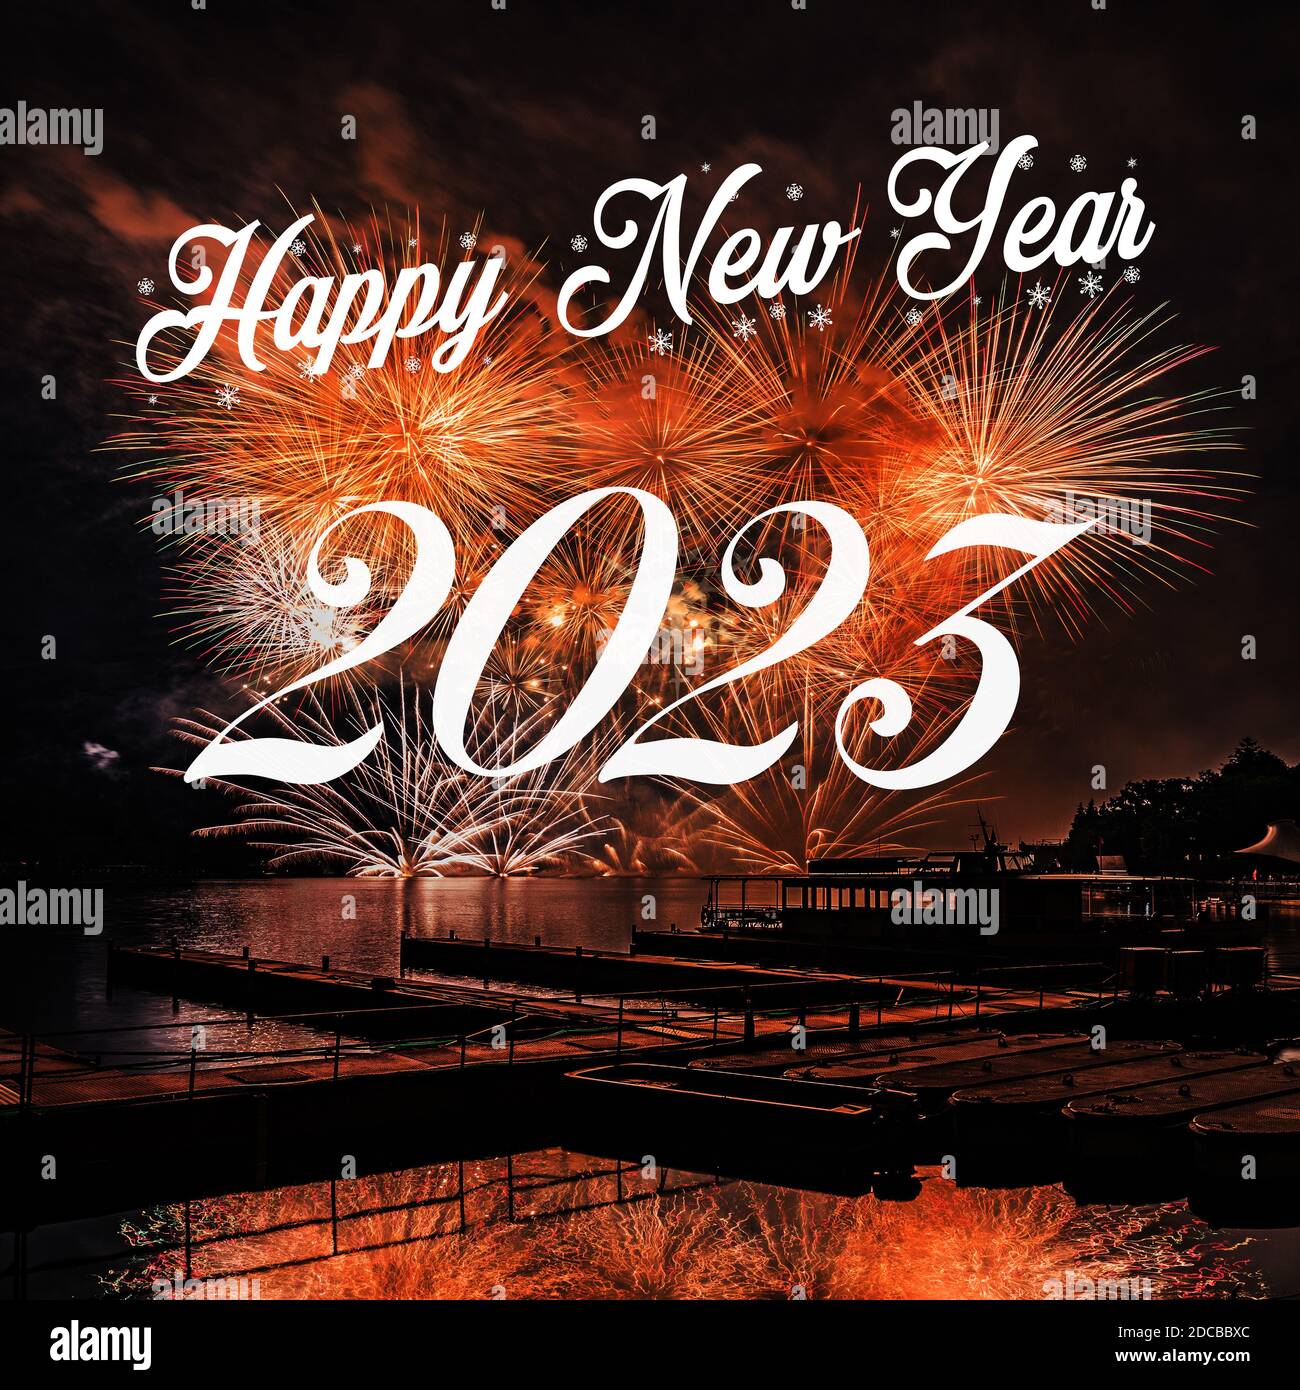 Happy new year 2023 with fireworks background. Celebration New Year 2023  Stock Photo - Alamy